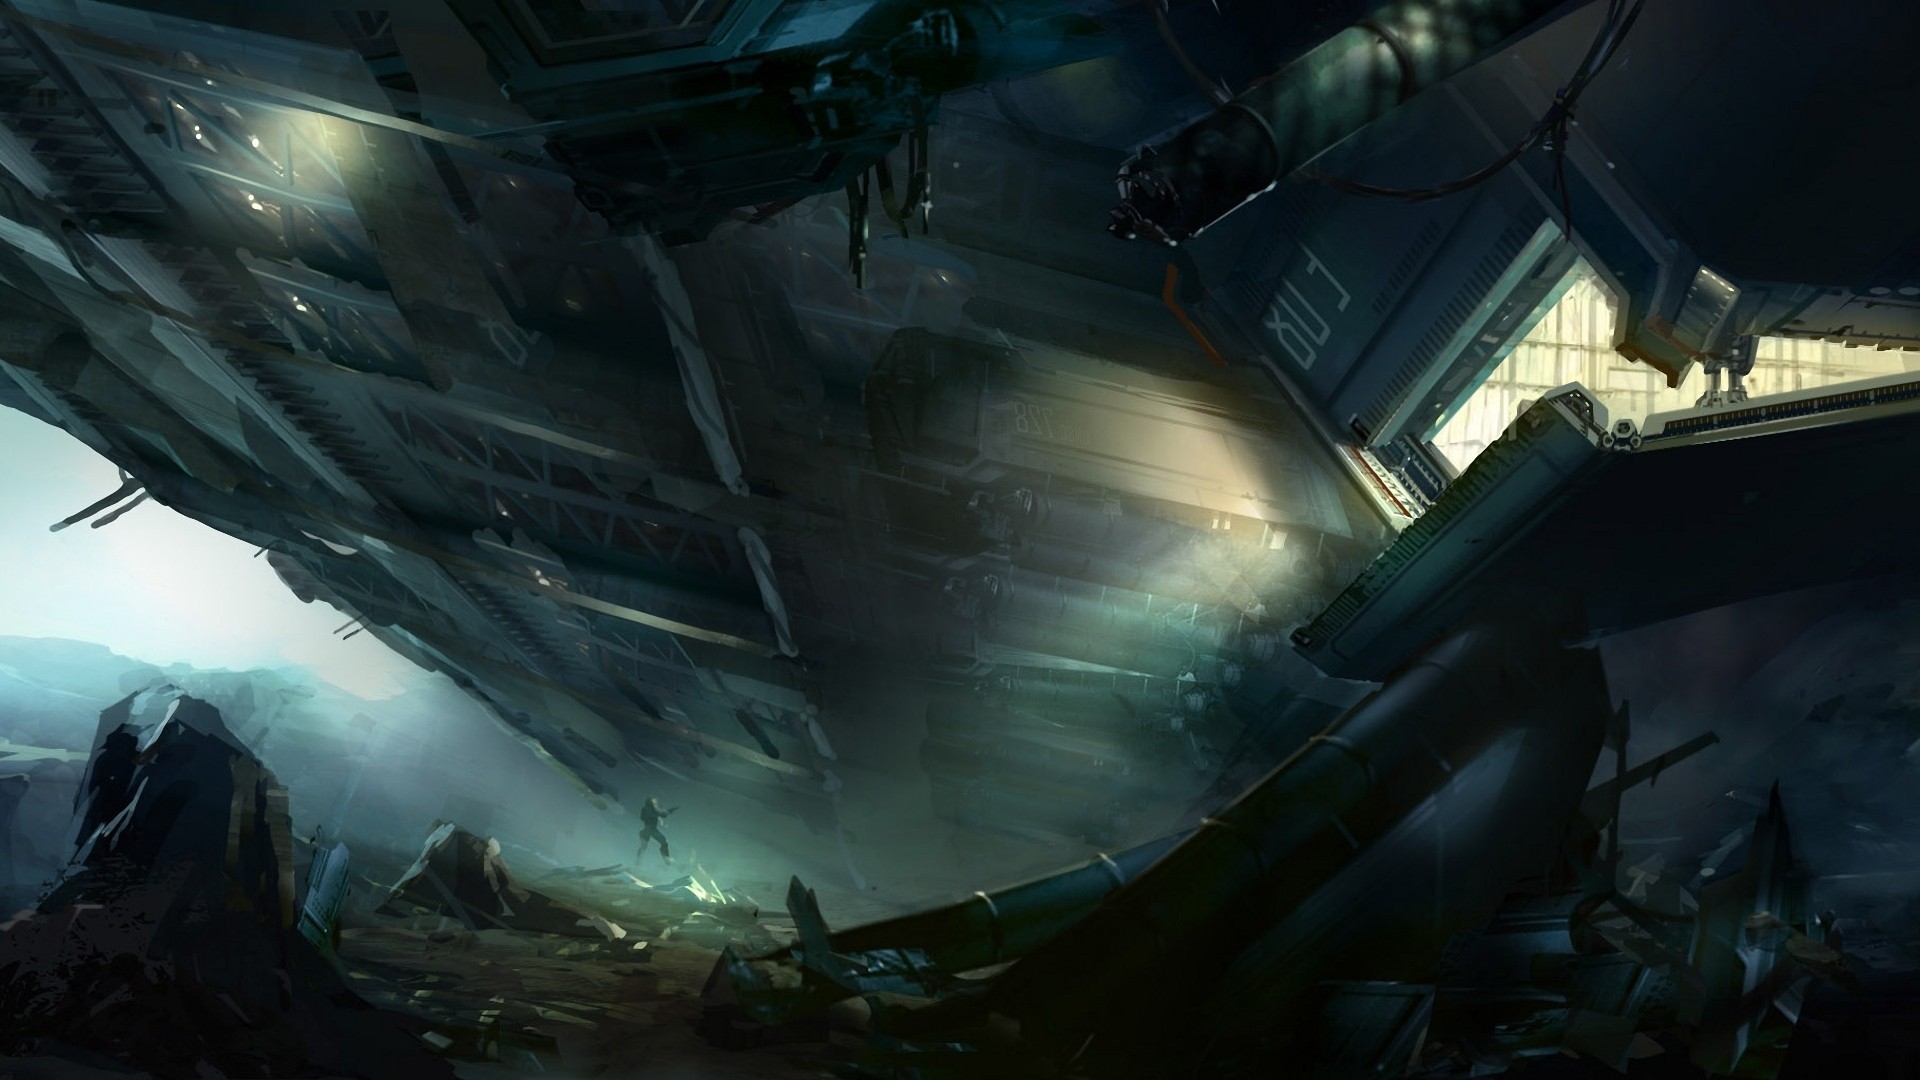 1920x1080 Artwork Dark Fantasy Art Halo 4 Hangar Landing Outer Space Science Fiction  Spaceships Vehicles